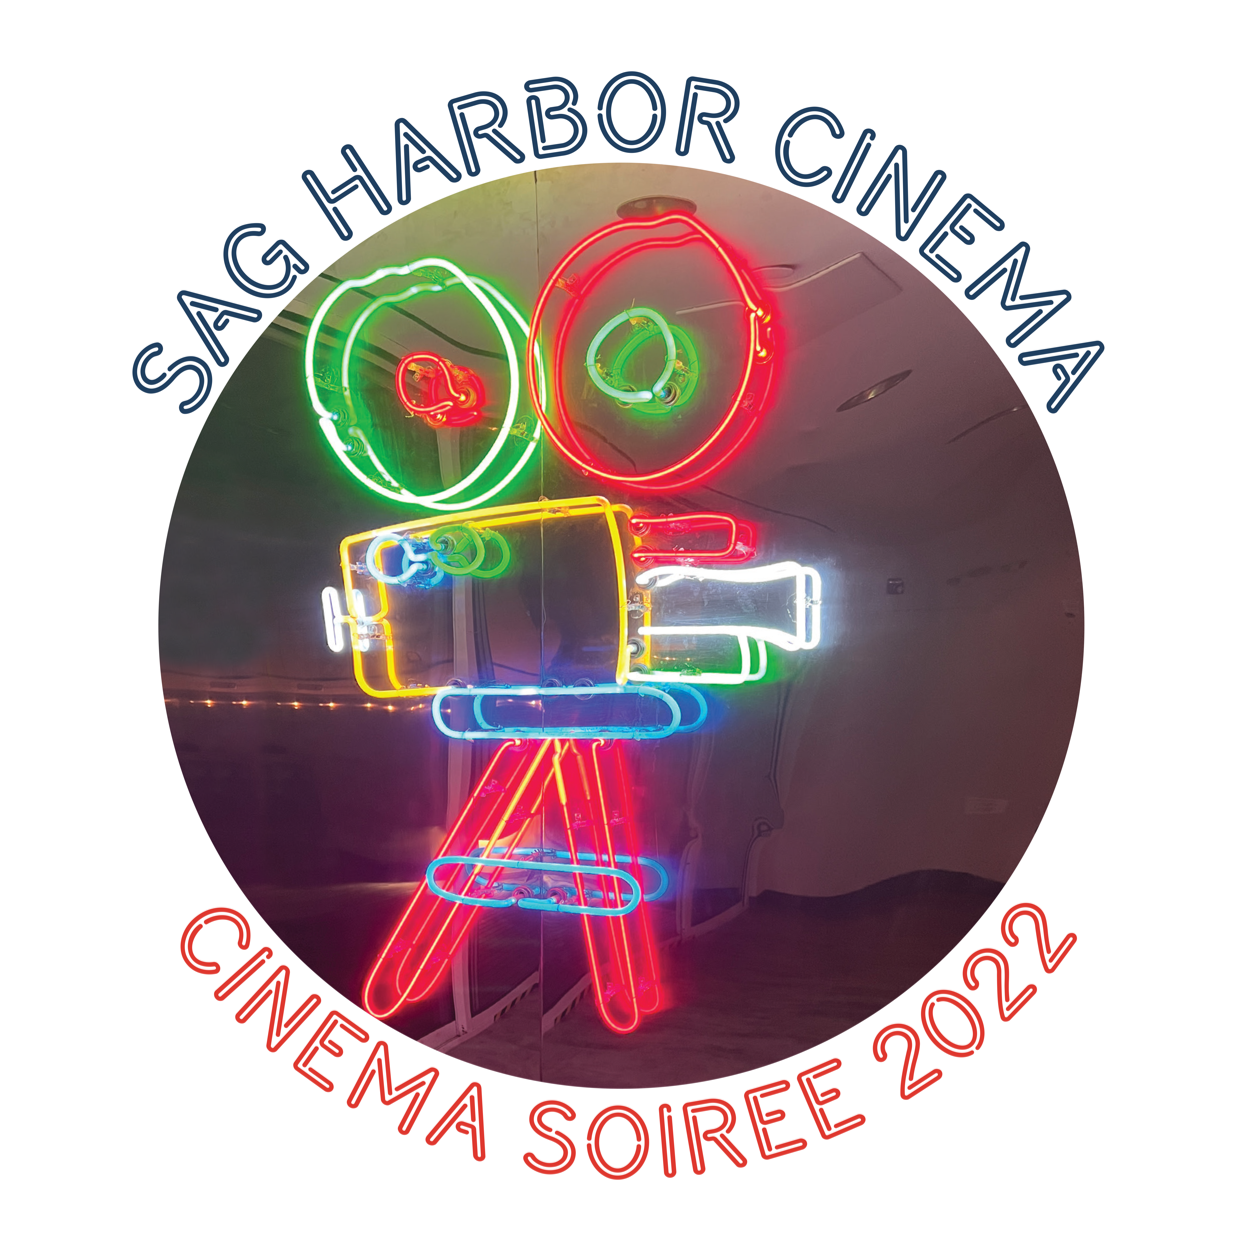 SHC_Cinema_Soiree_Front.png